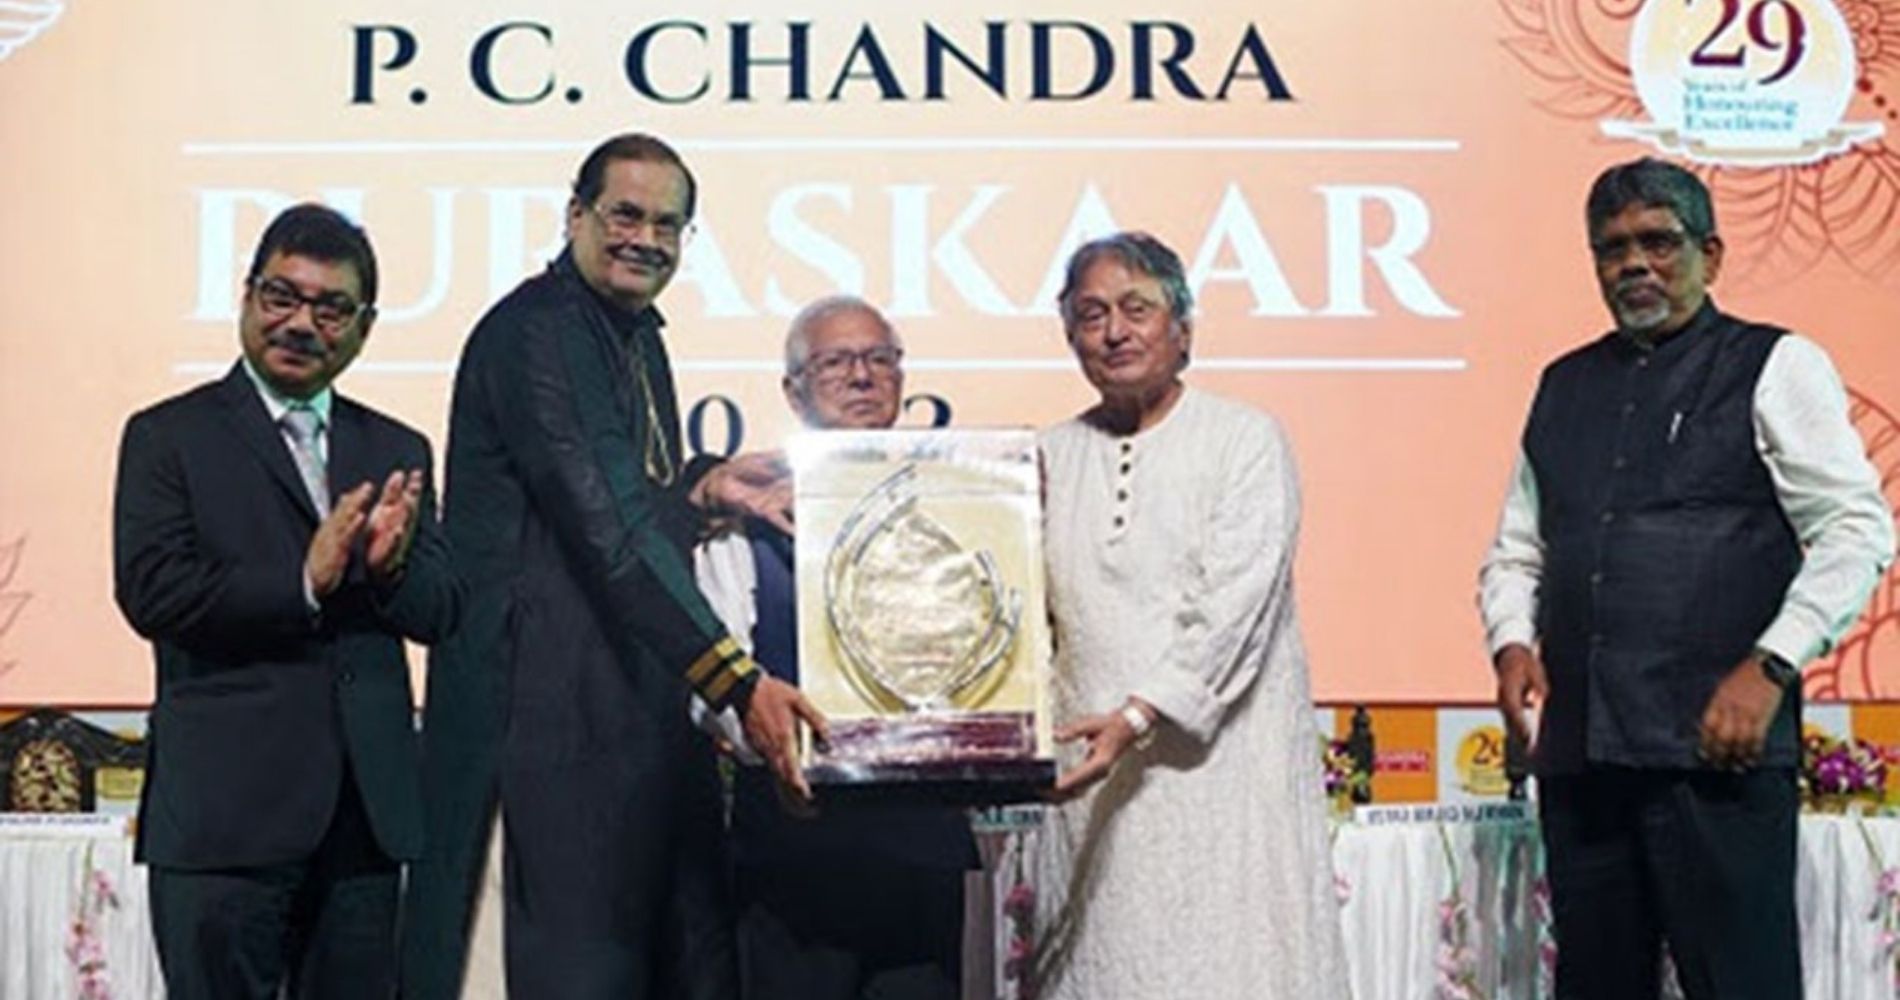 P.C. Chandra Group felicitates Ustad Amjad Ali Khan at the 29th P.C. Chandra Puraskaar